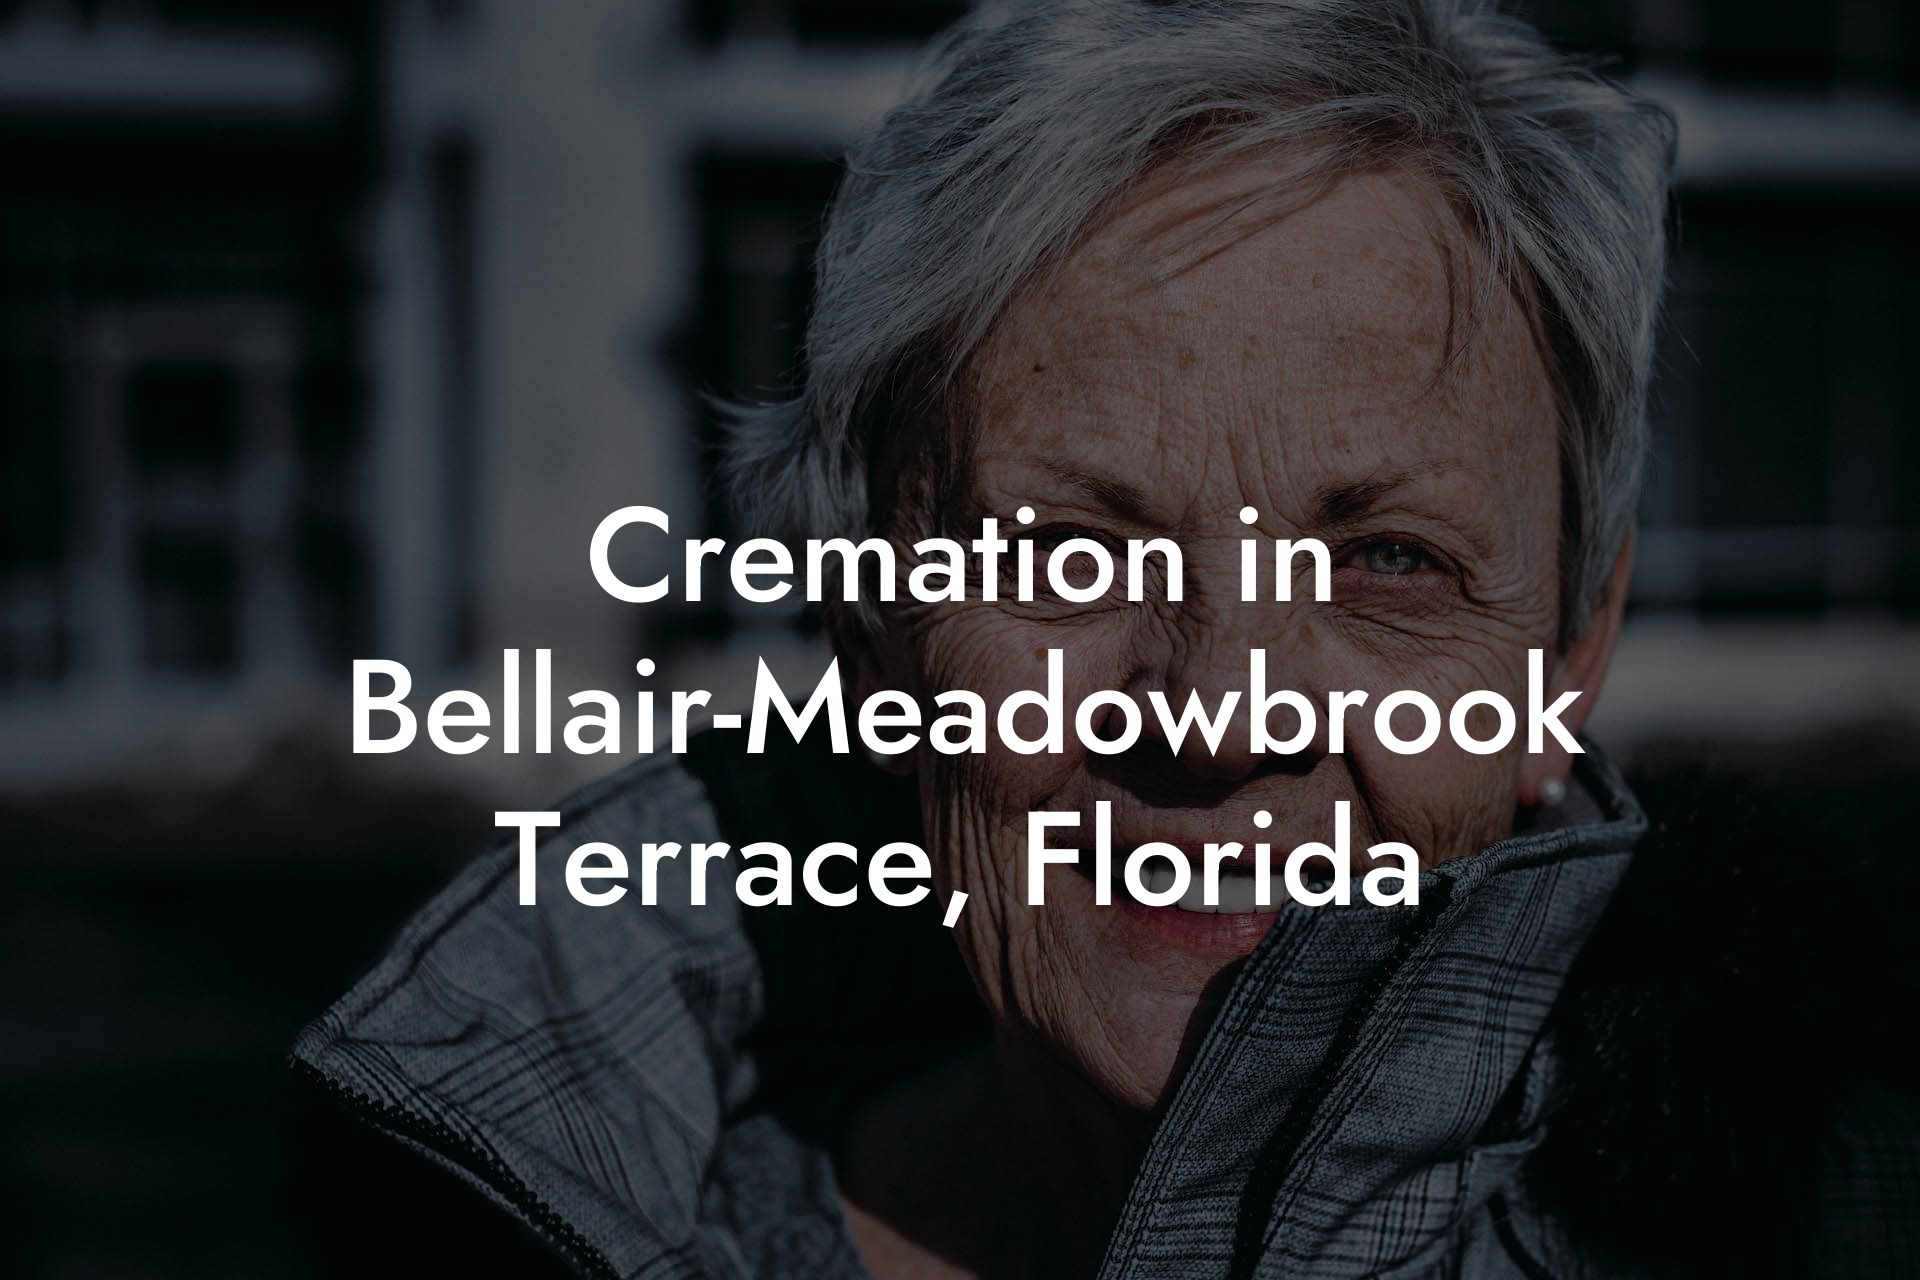 Cremation in Bellair-Meadowbrook Terrace, Florida